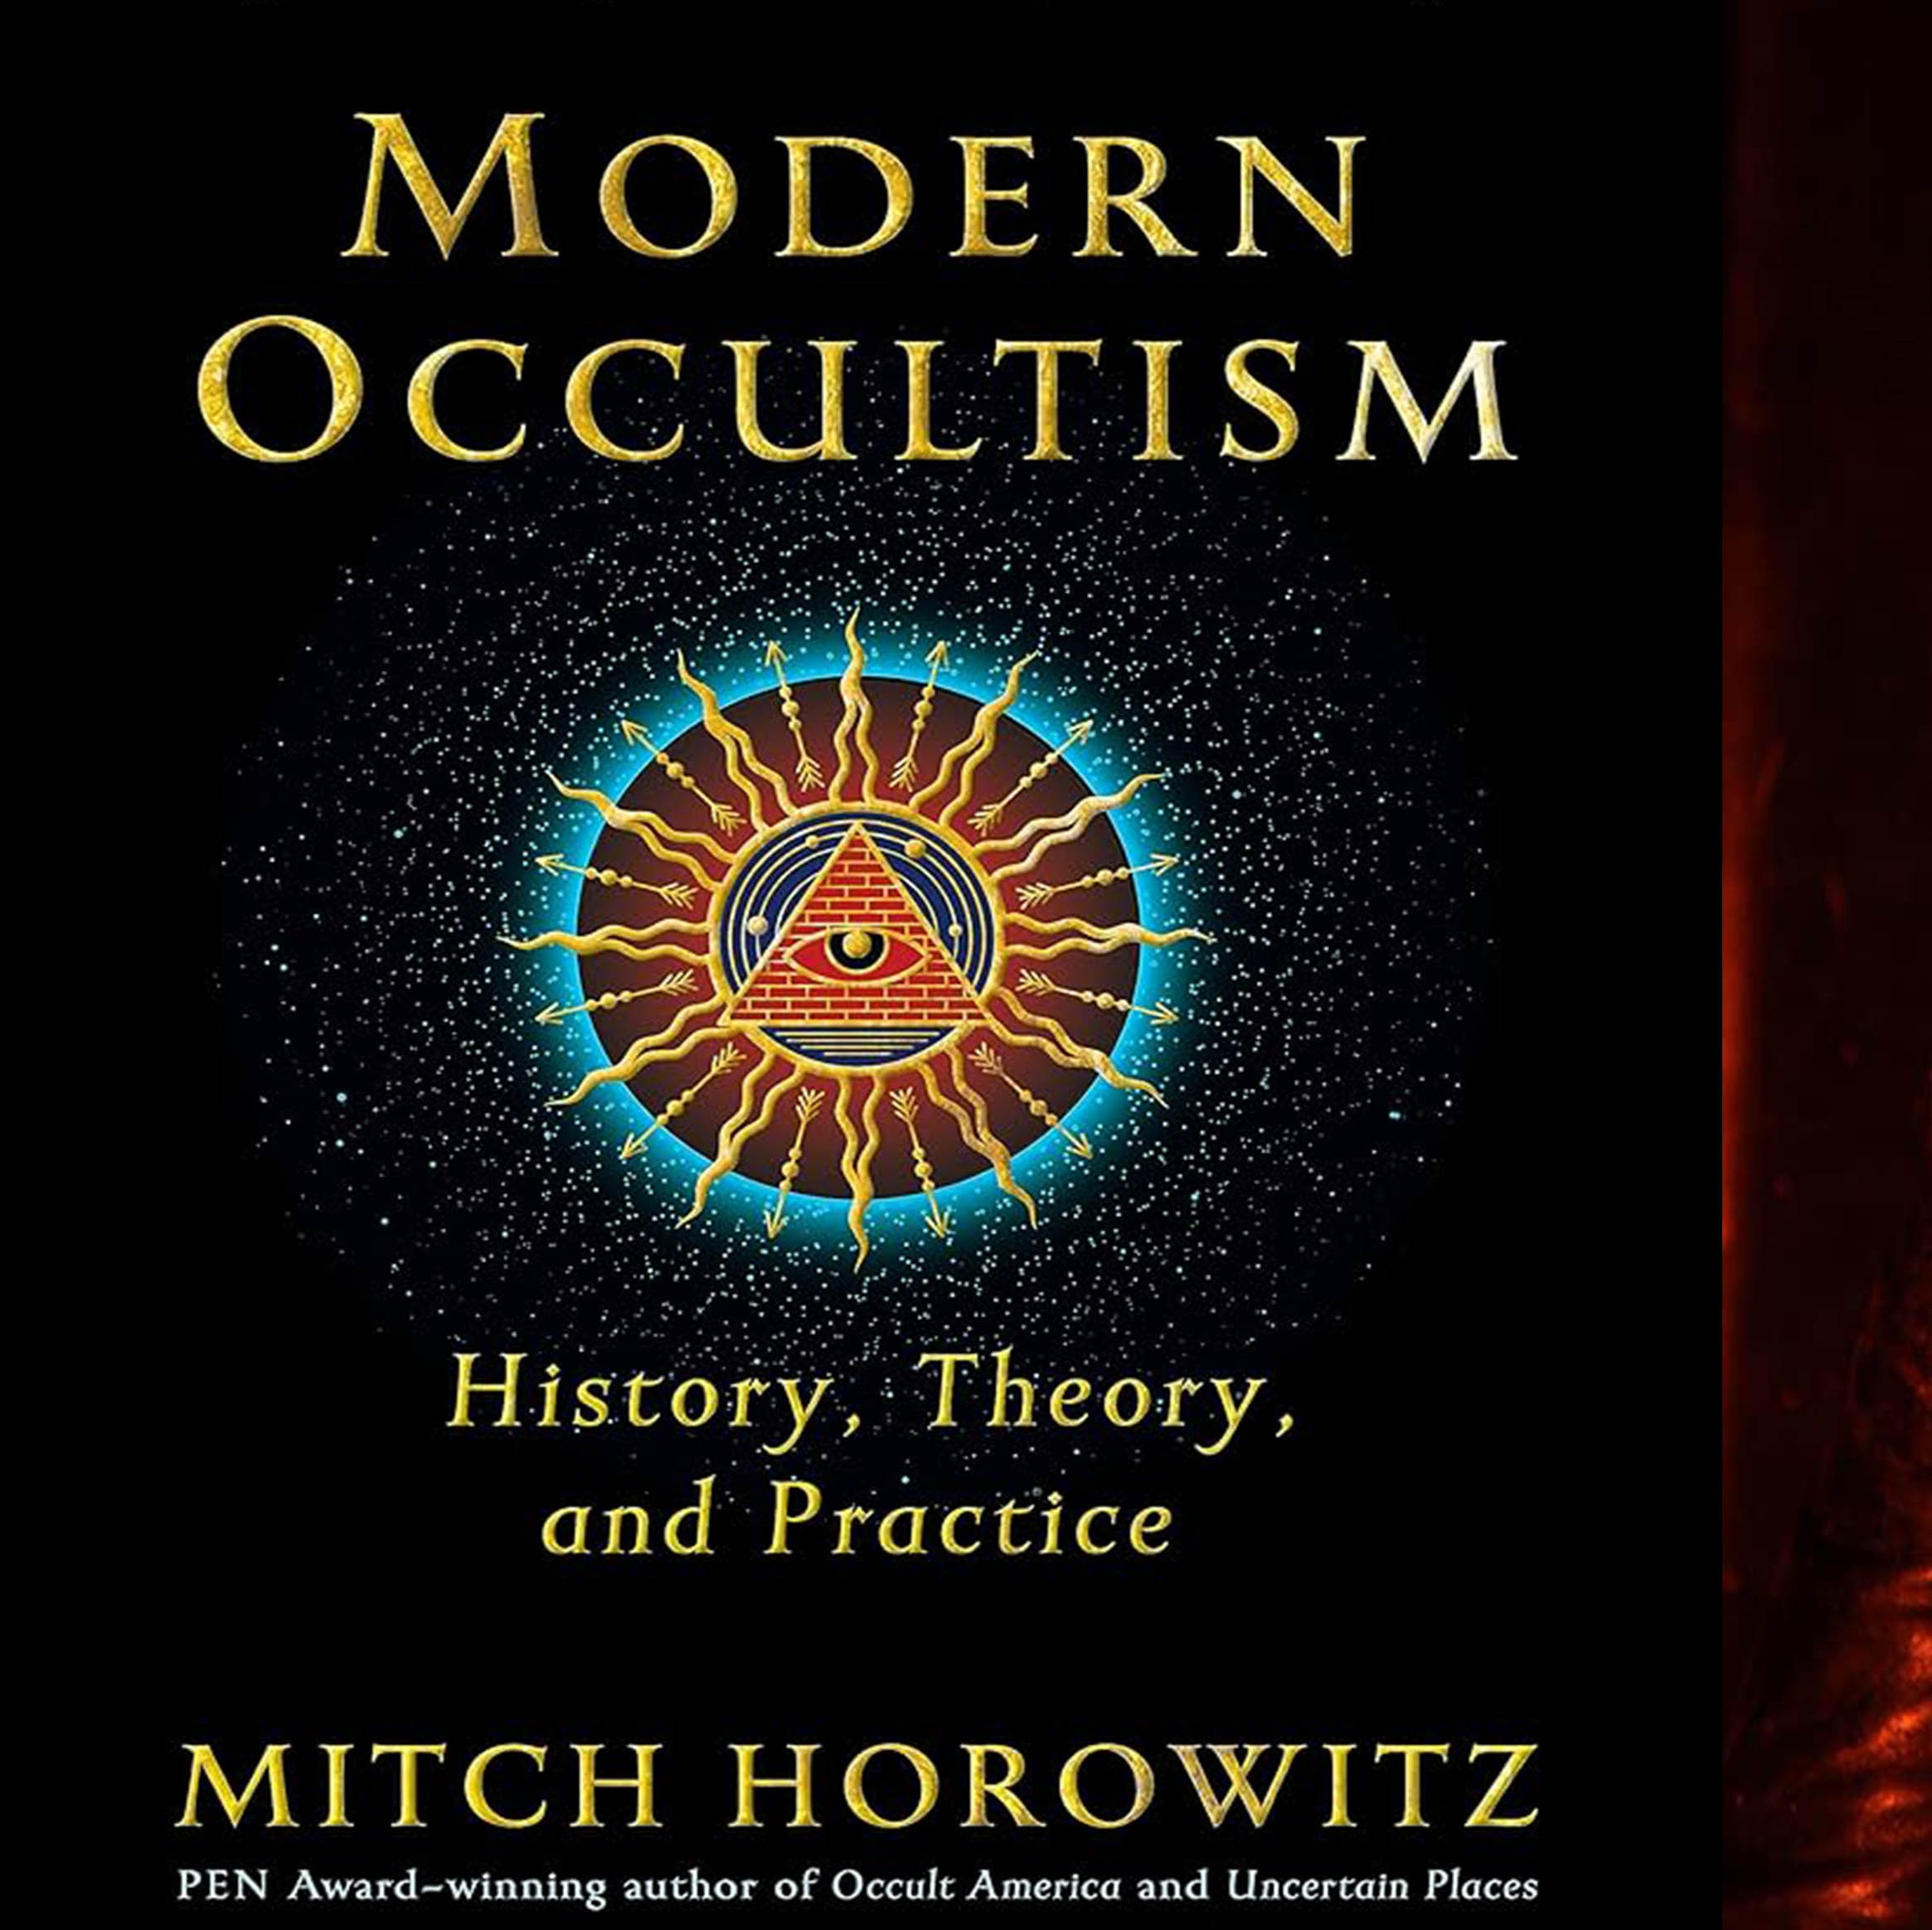 Mitch Horowitz on Modern Occultism